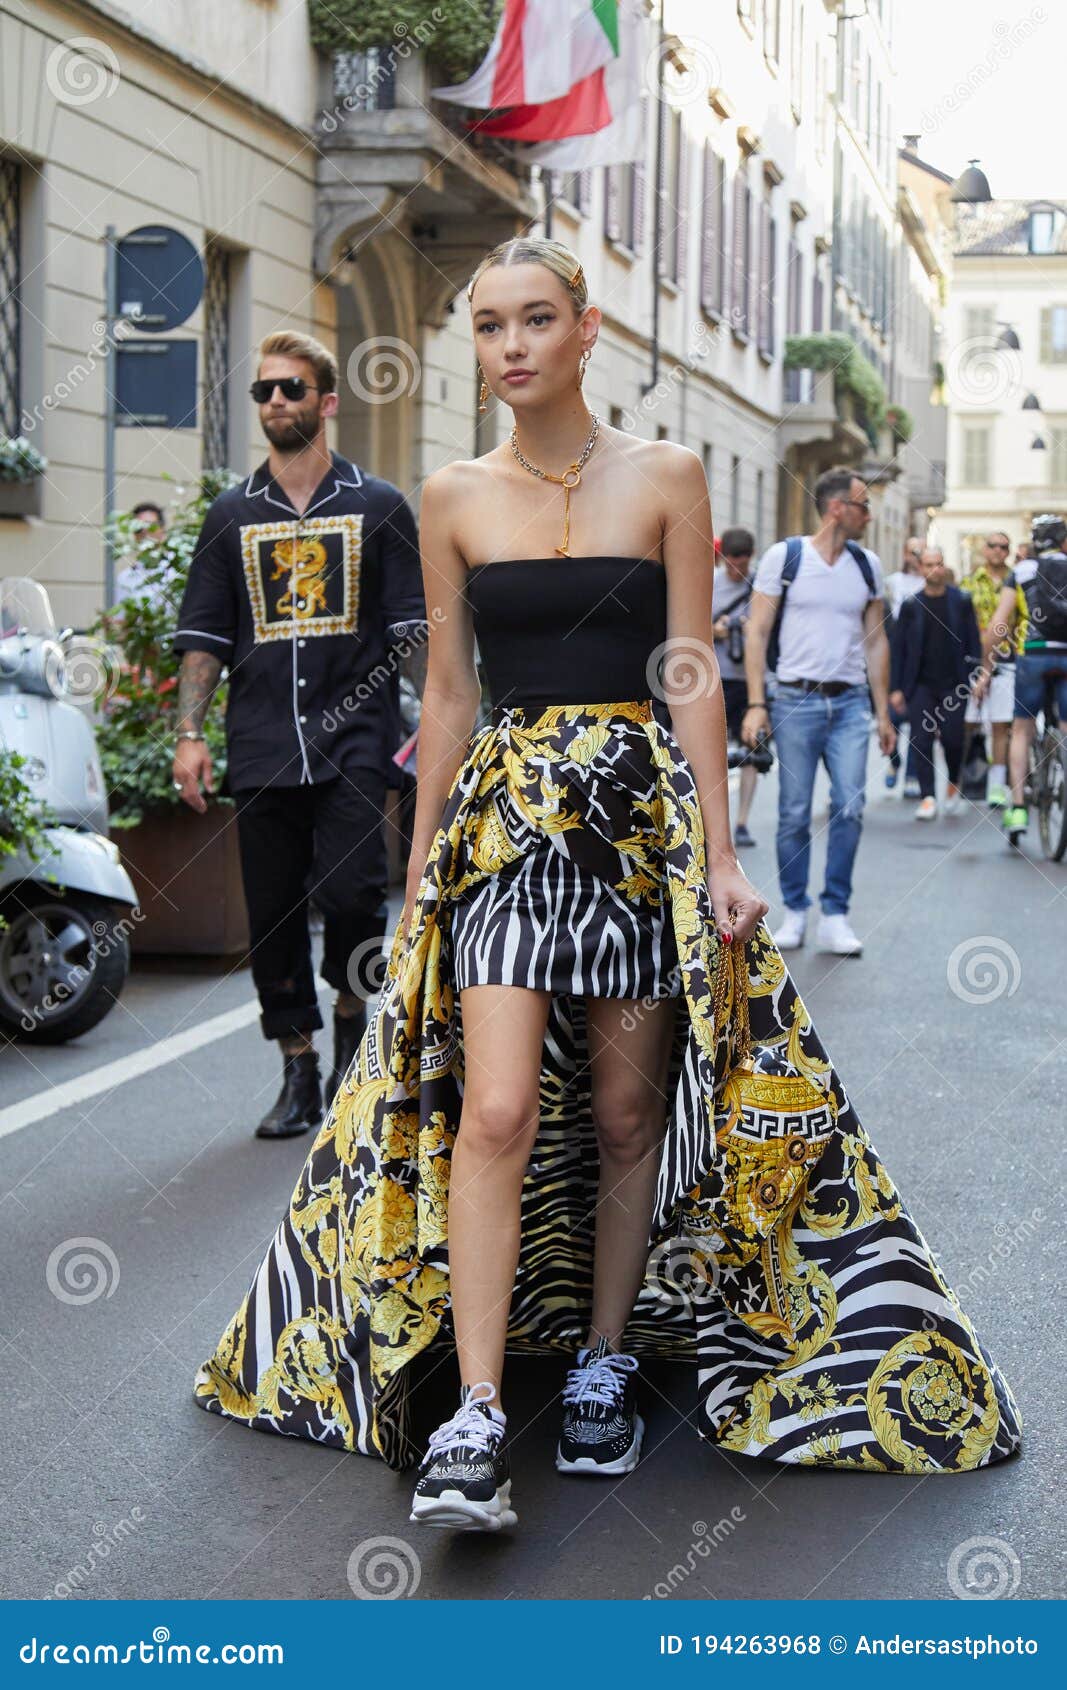 https://thumbs.dreamstime.com/z/milan-italy-june-woman-versace-skirt-golden-black-white-design-versace-fashion-show-milan-milan-italy-june-194263968.jpg